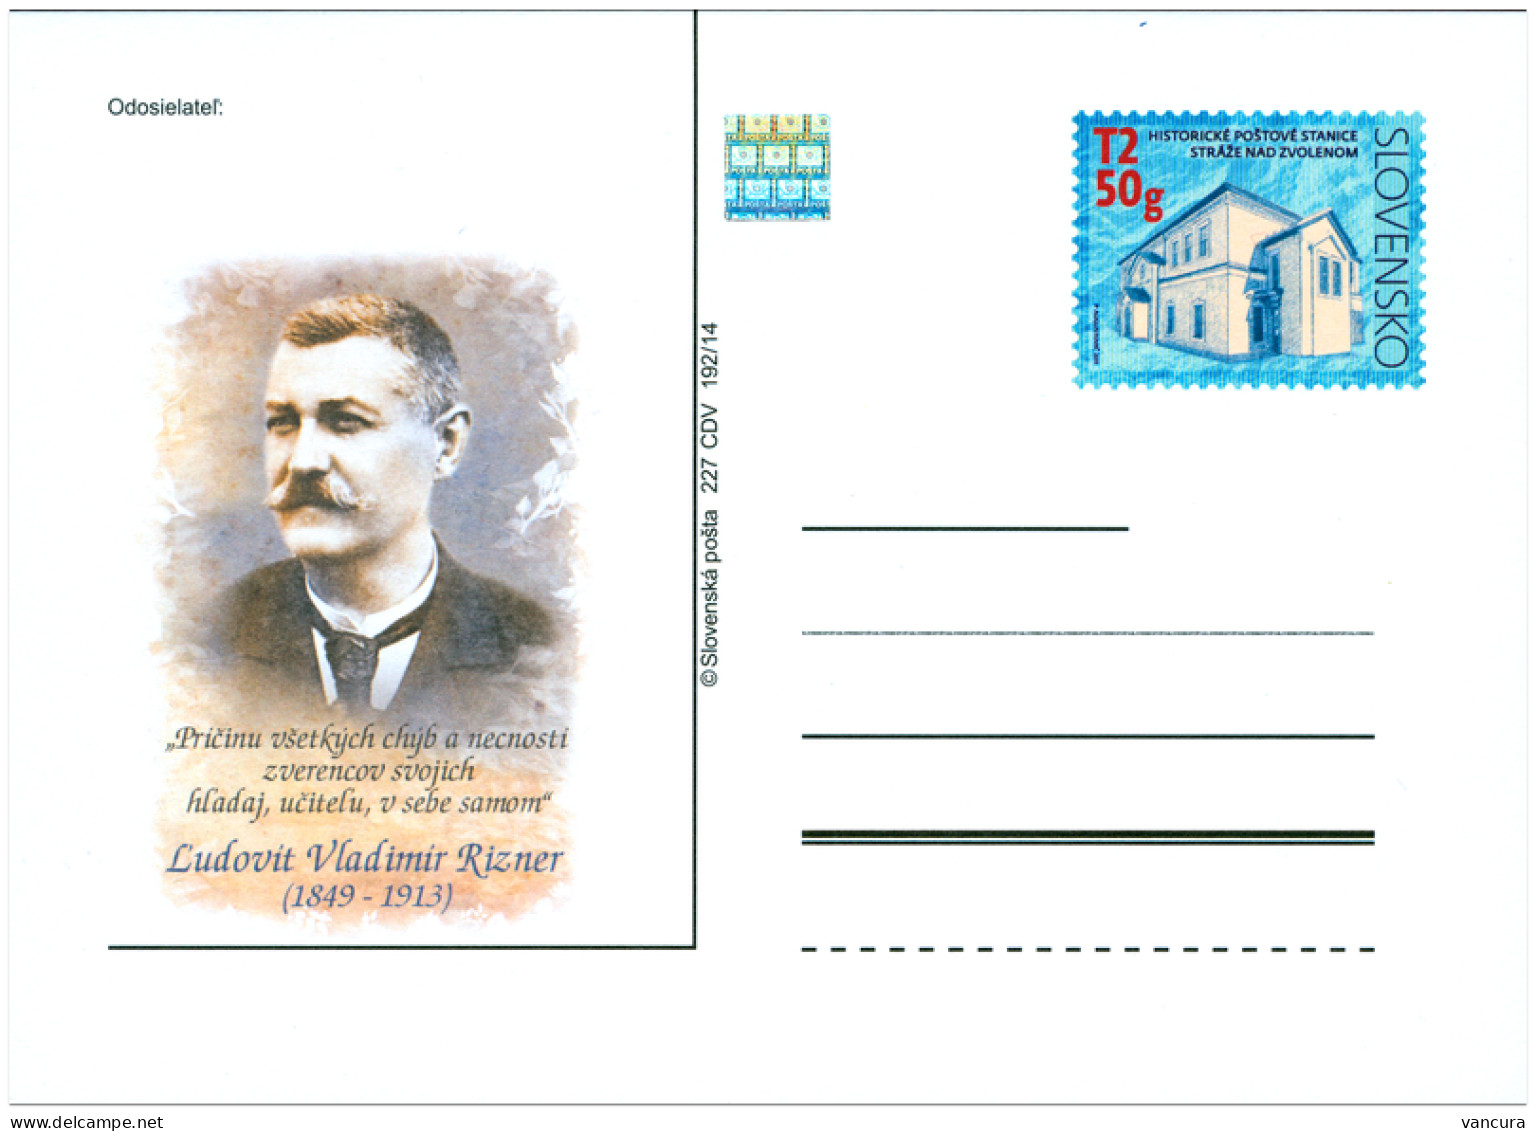 CDV 227 Slovakia L. Rizner Anniversary 2014 Ethnograph, Historian - Postcards